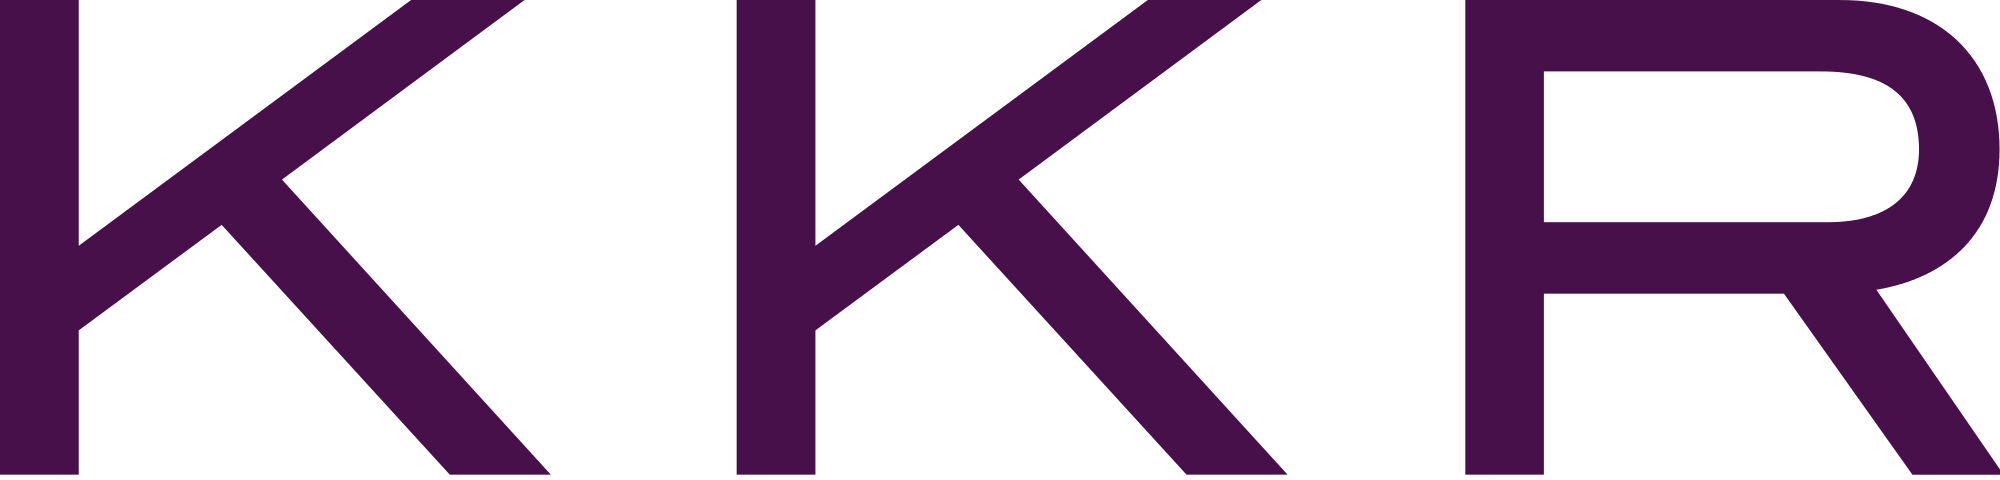 KKR Logo - Kohlberg Kravis Roberts (logo).svg